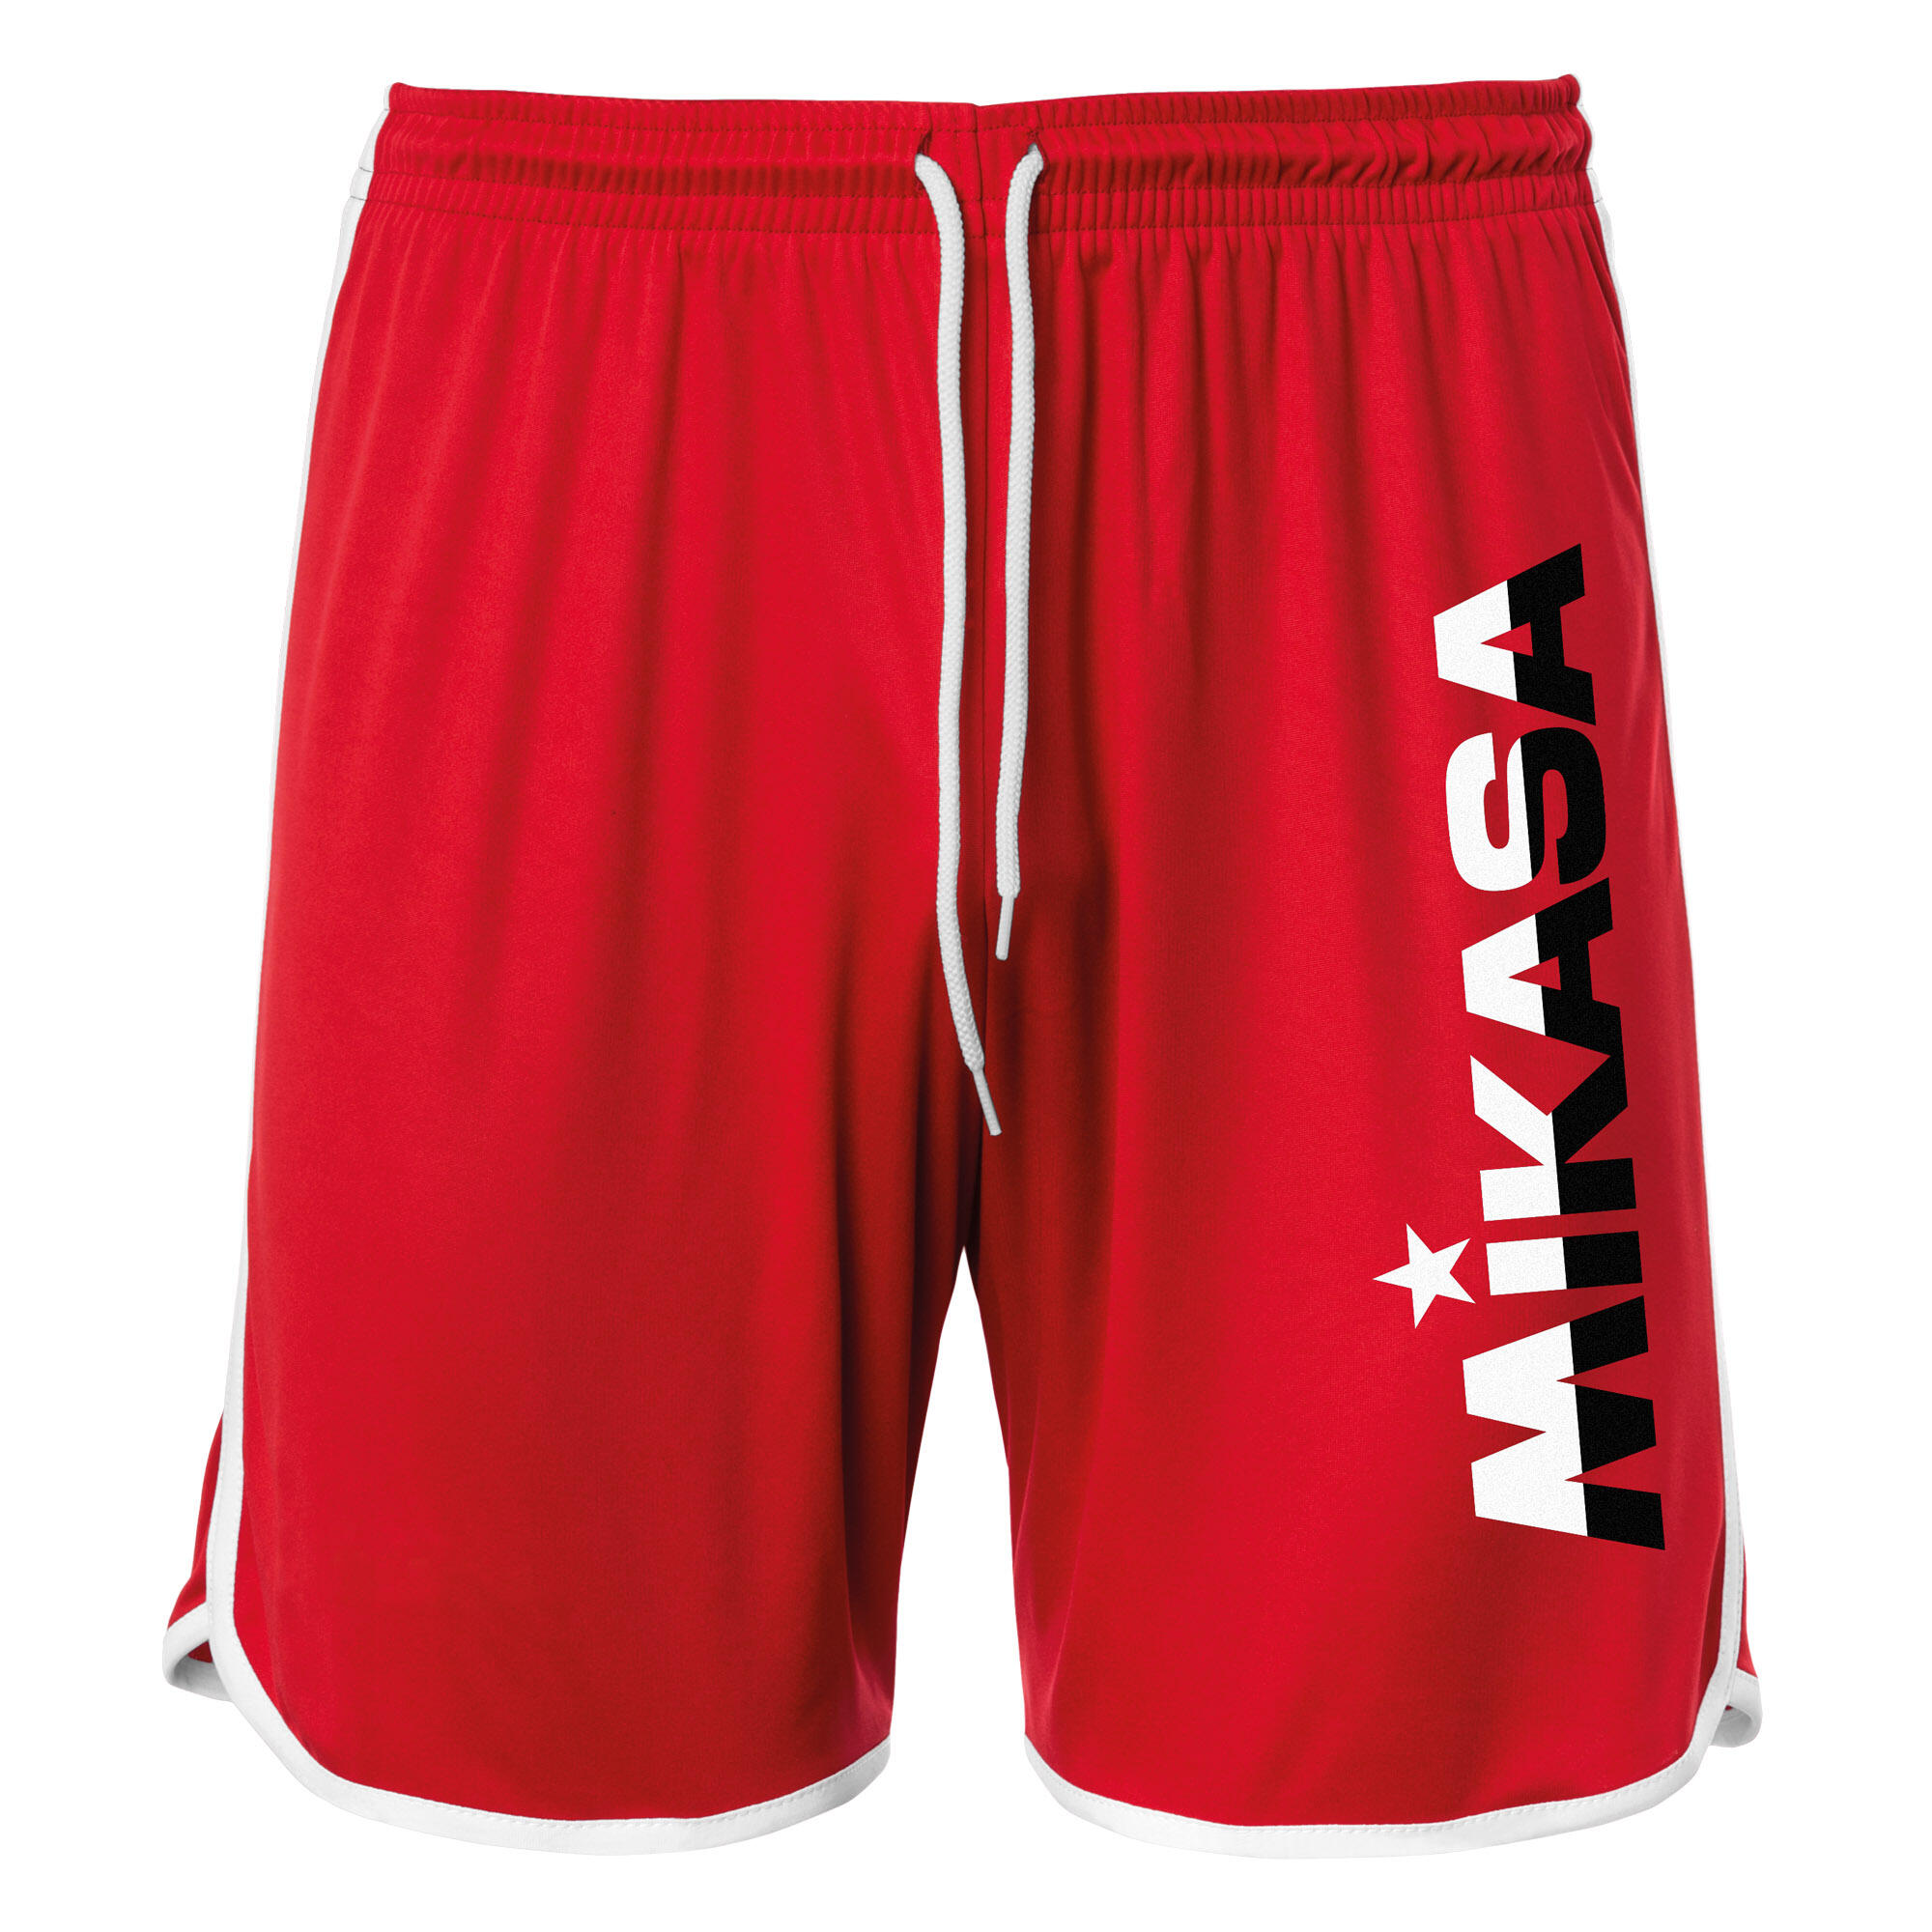 Red Sports Shorts Pantaloncini Fitness Sudore da Palestra Uomo Caldo Outdoor Leggings YW 